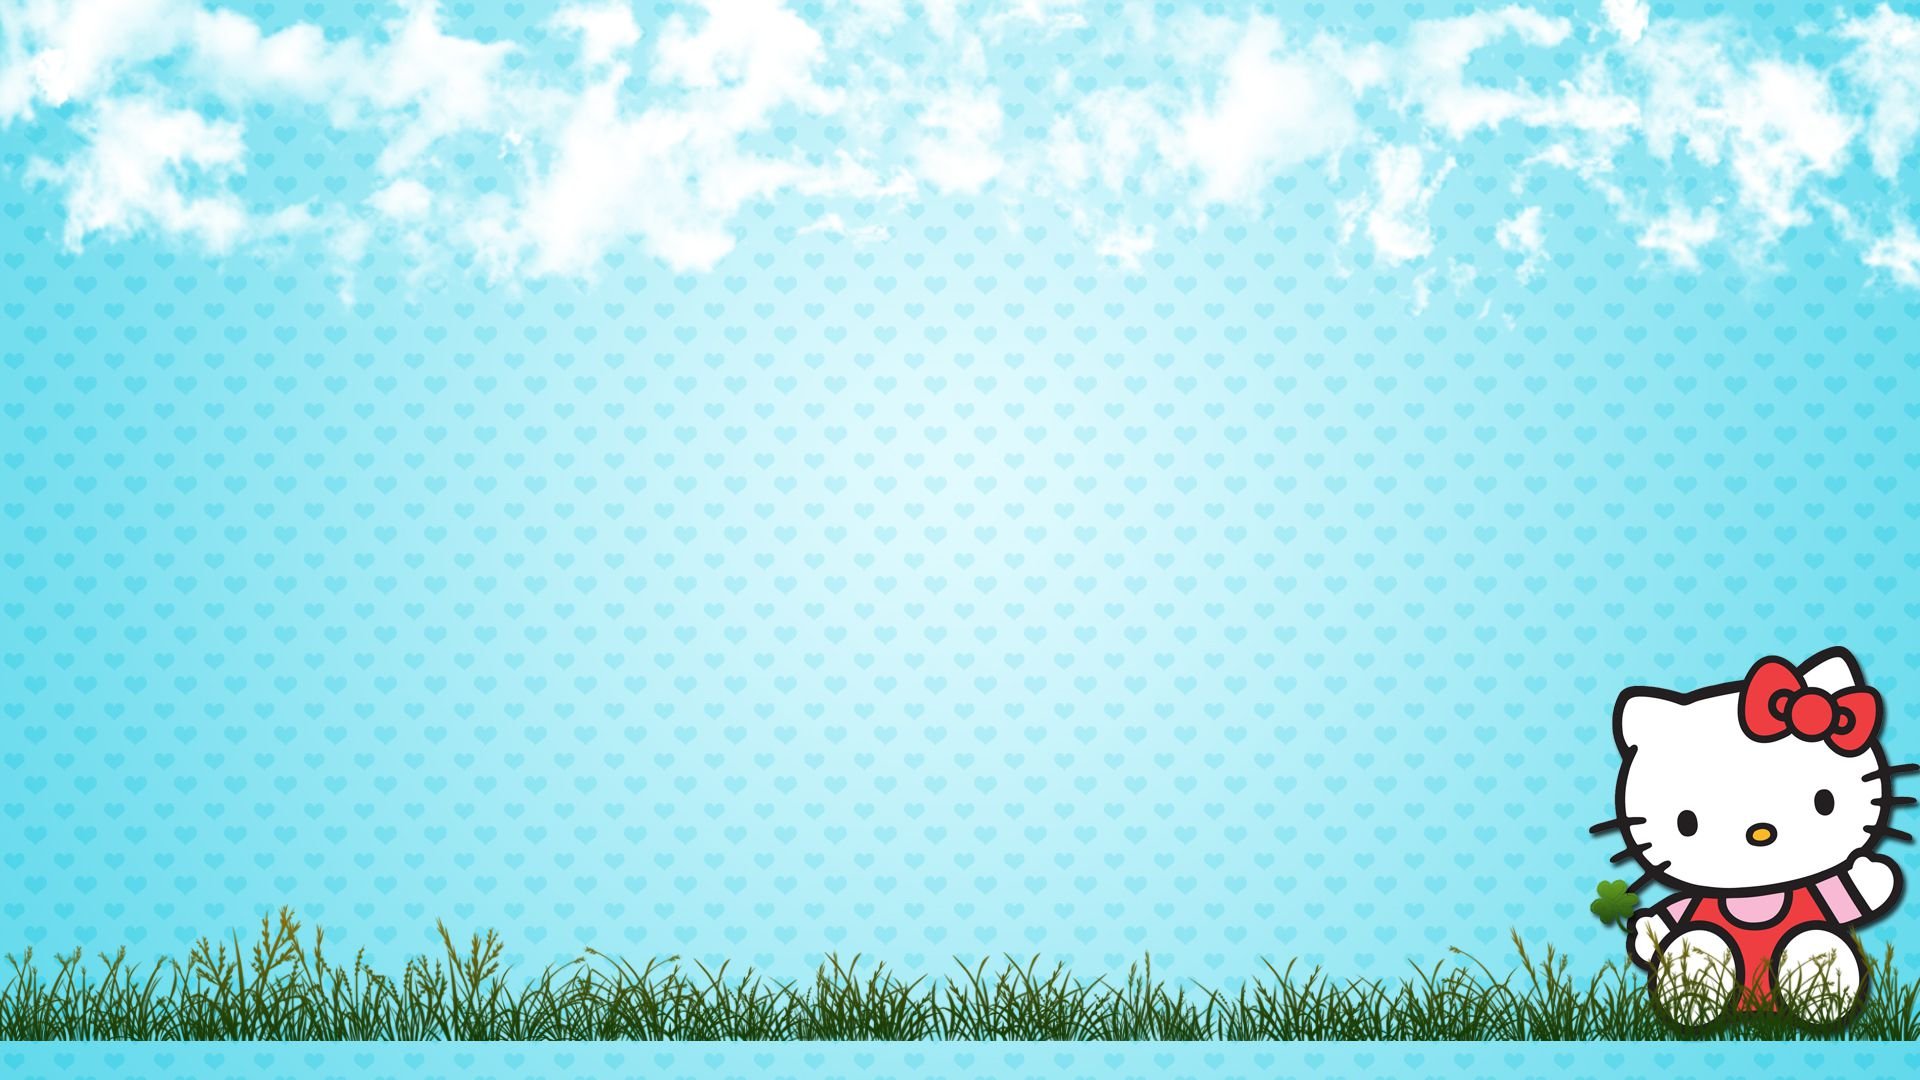 Hello Kitty Summer Wallpaper Desktop with Blue Sky Background - HD